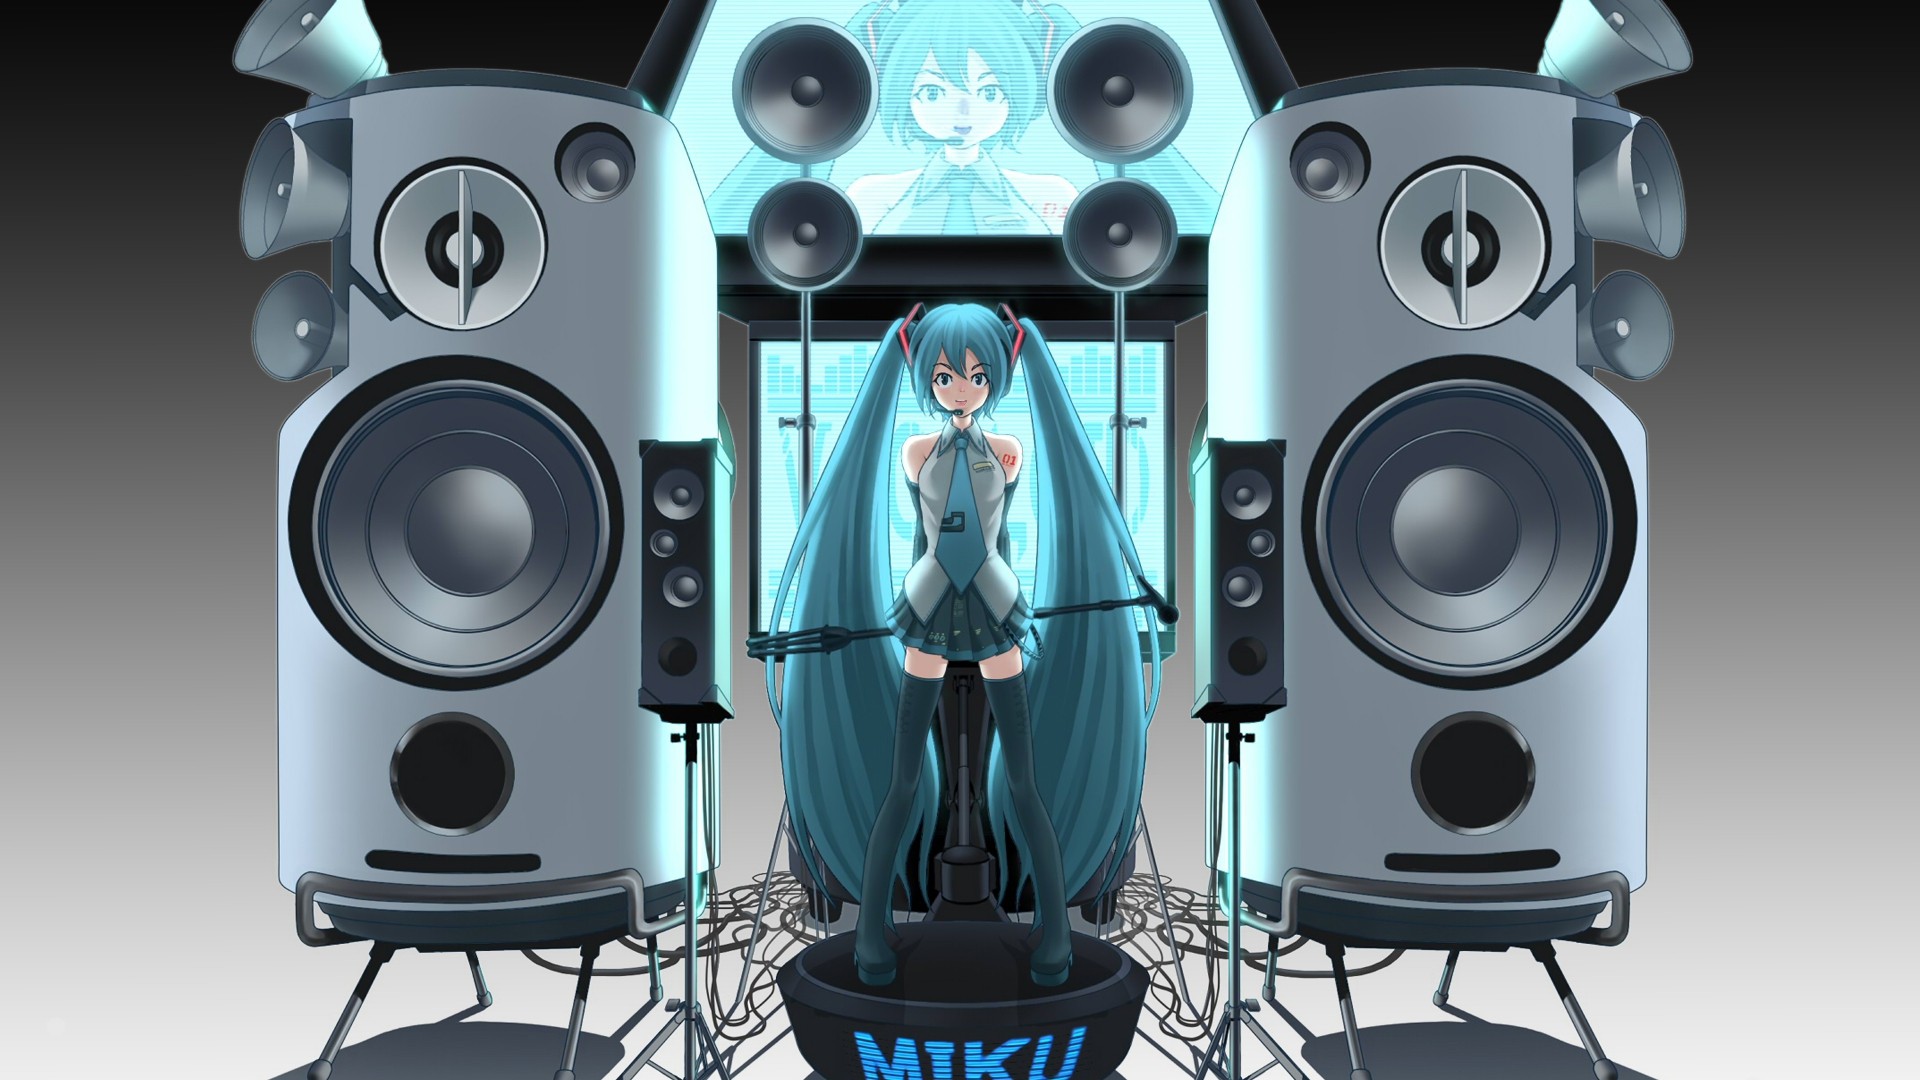 General 1920x1080 Hatsune Miku speakers anime girls anime cyan long hair audio-technica standing simple background gray background gradient tie stockings miniskirt